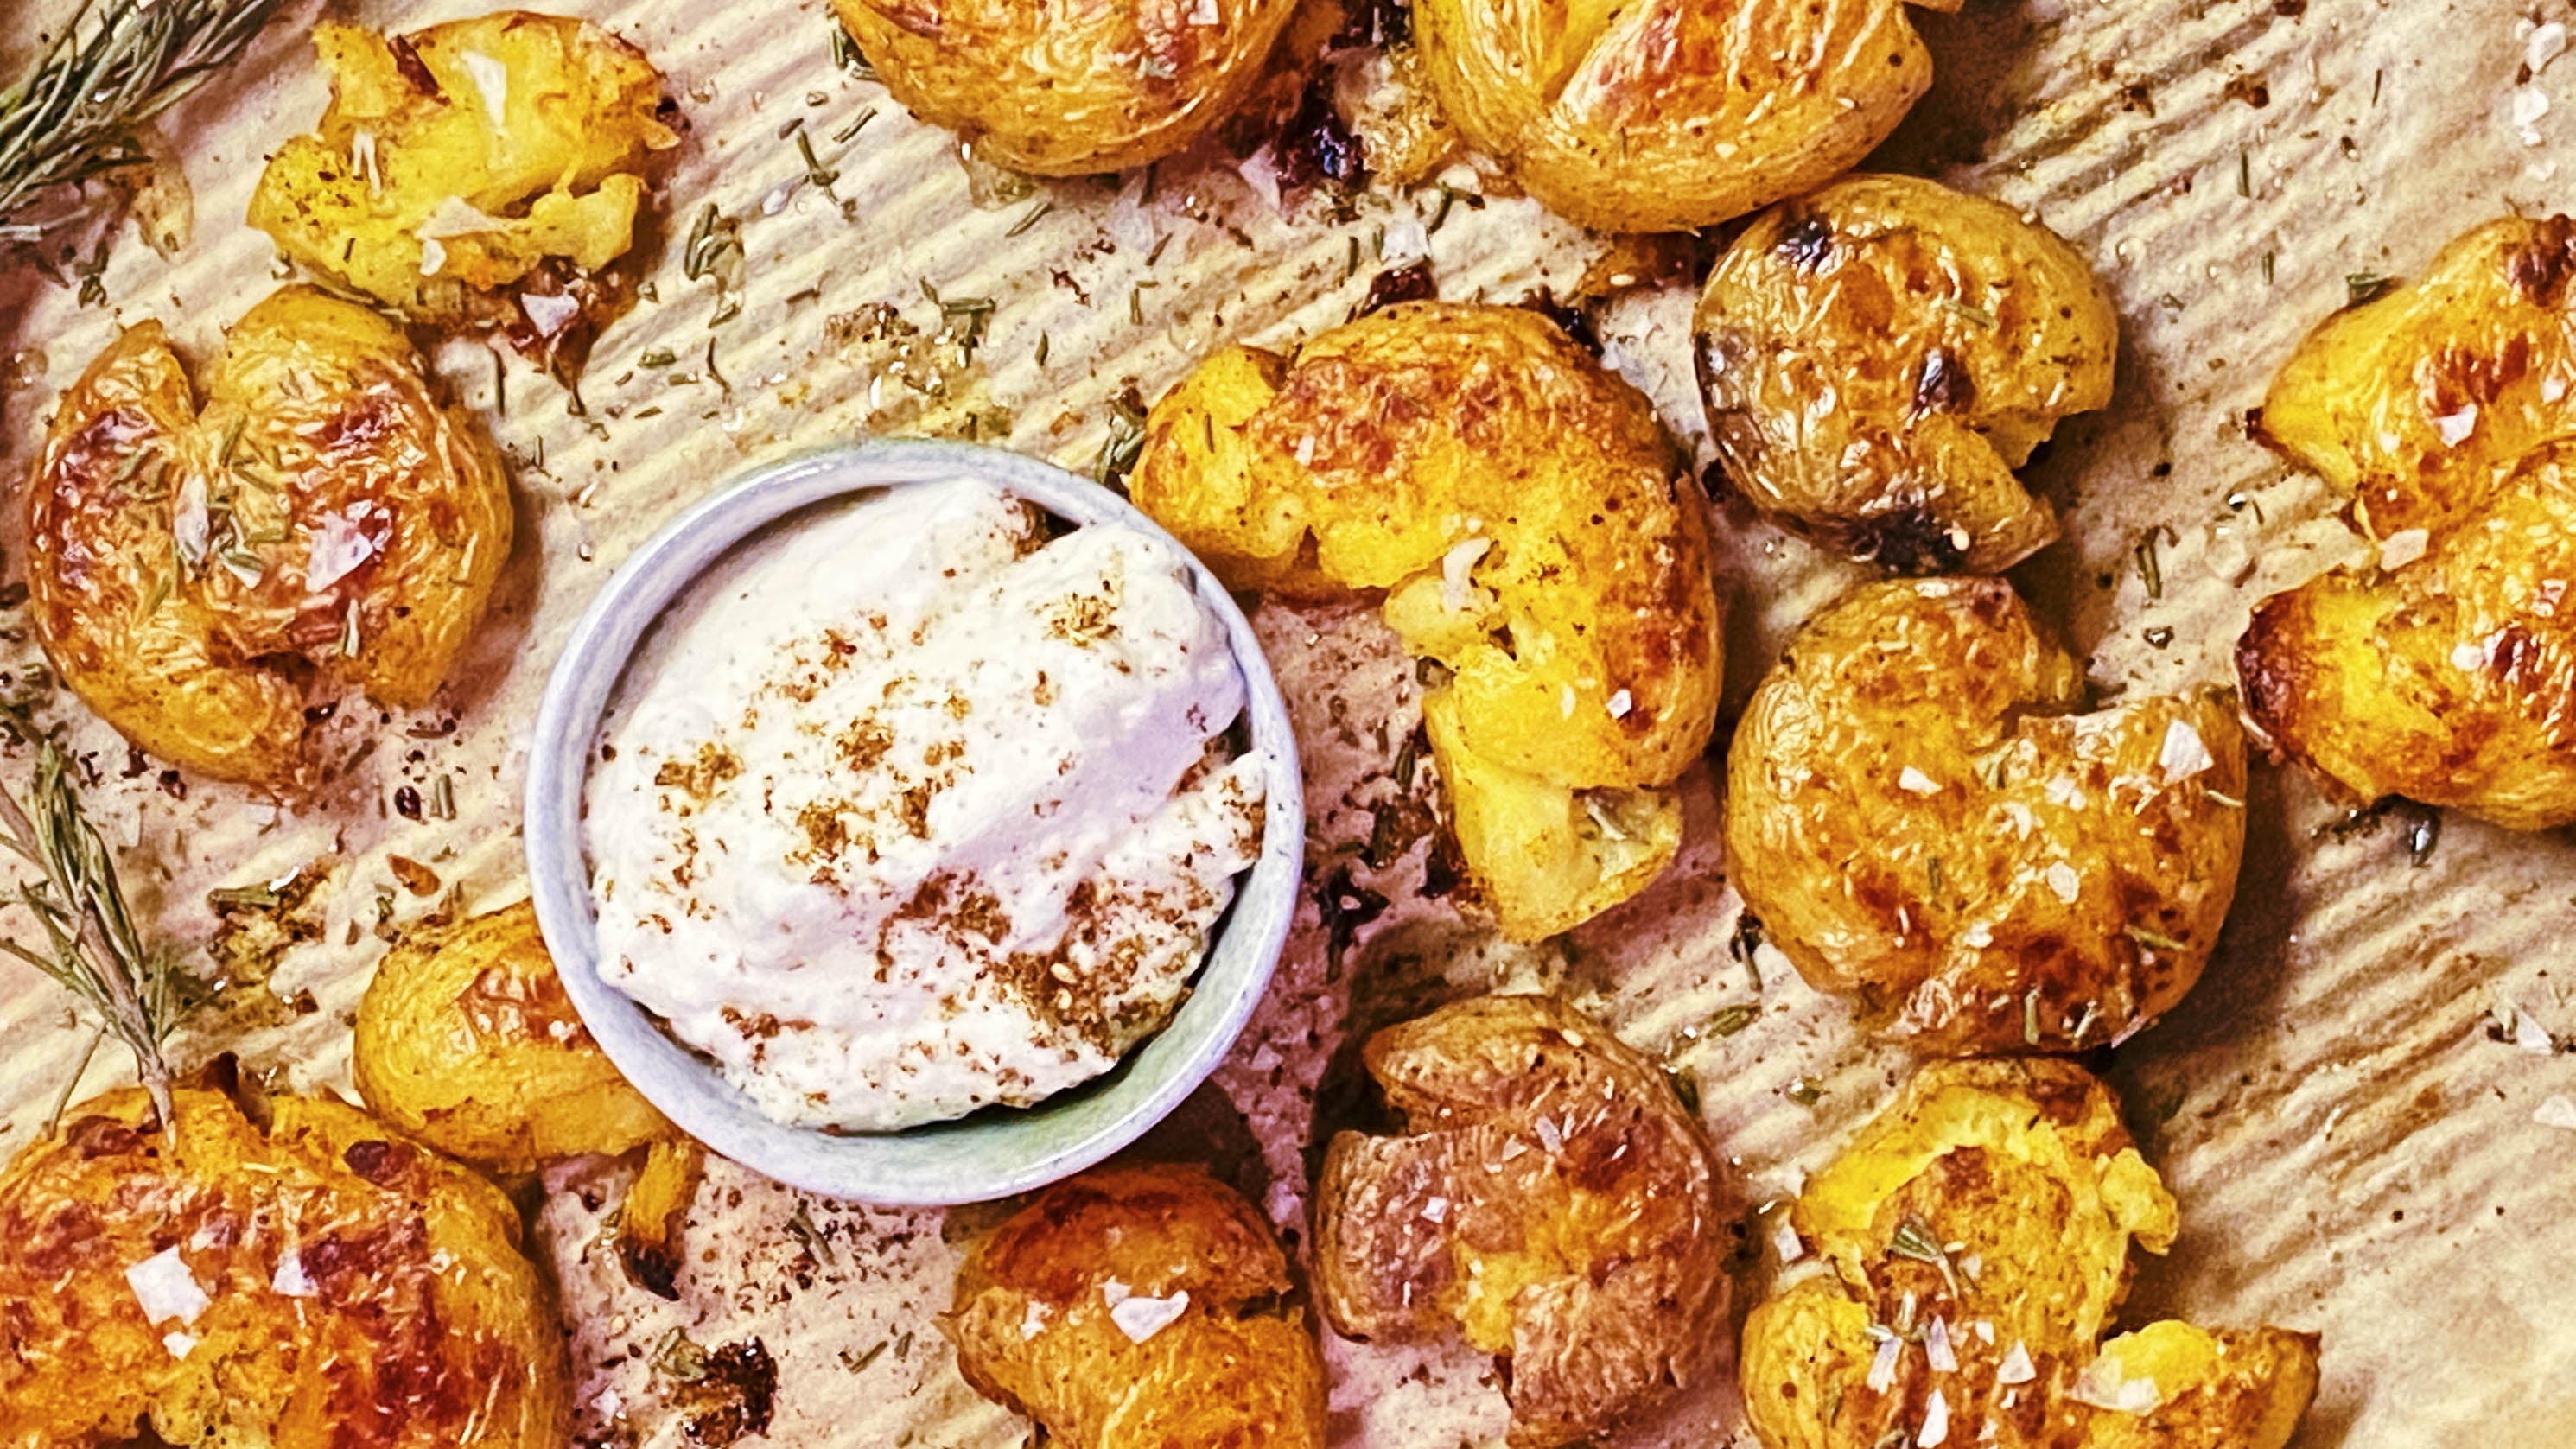 Garlic Herb Smashed Red Potatoes - Saving Room for Dessert